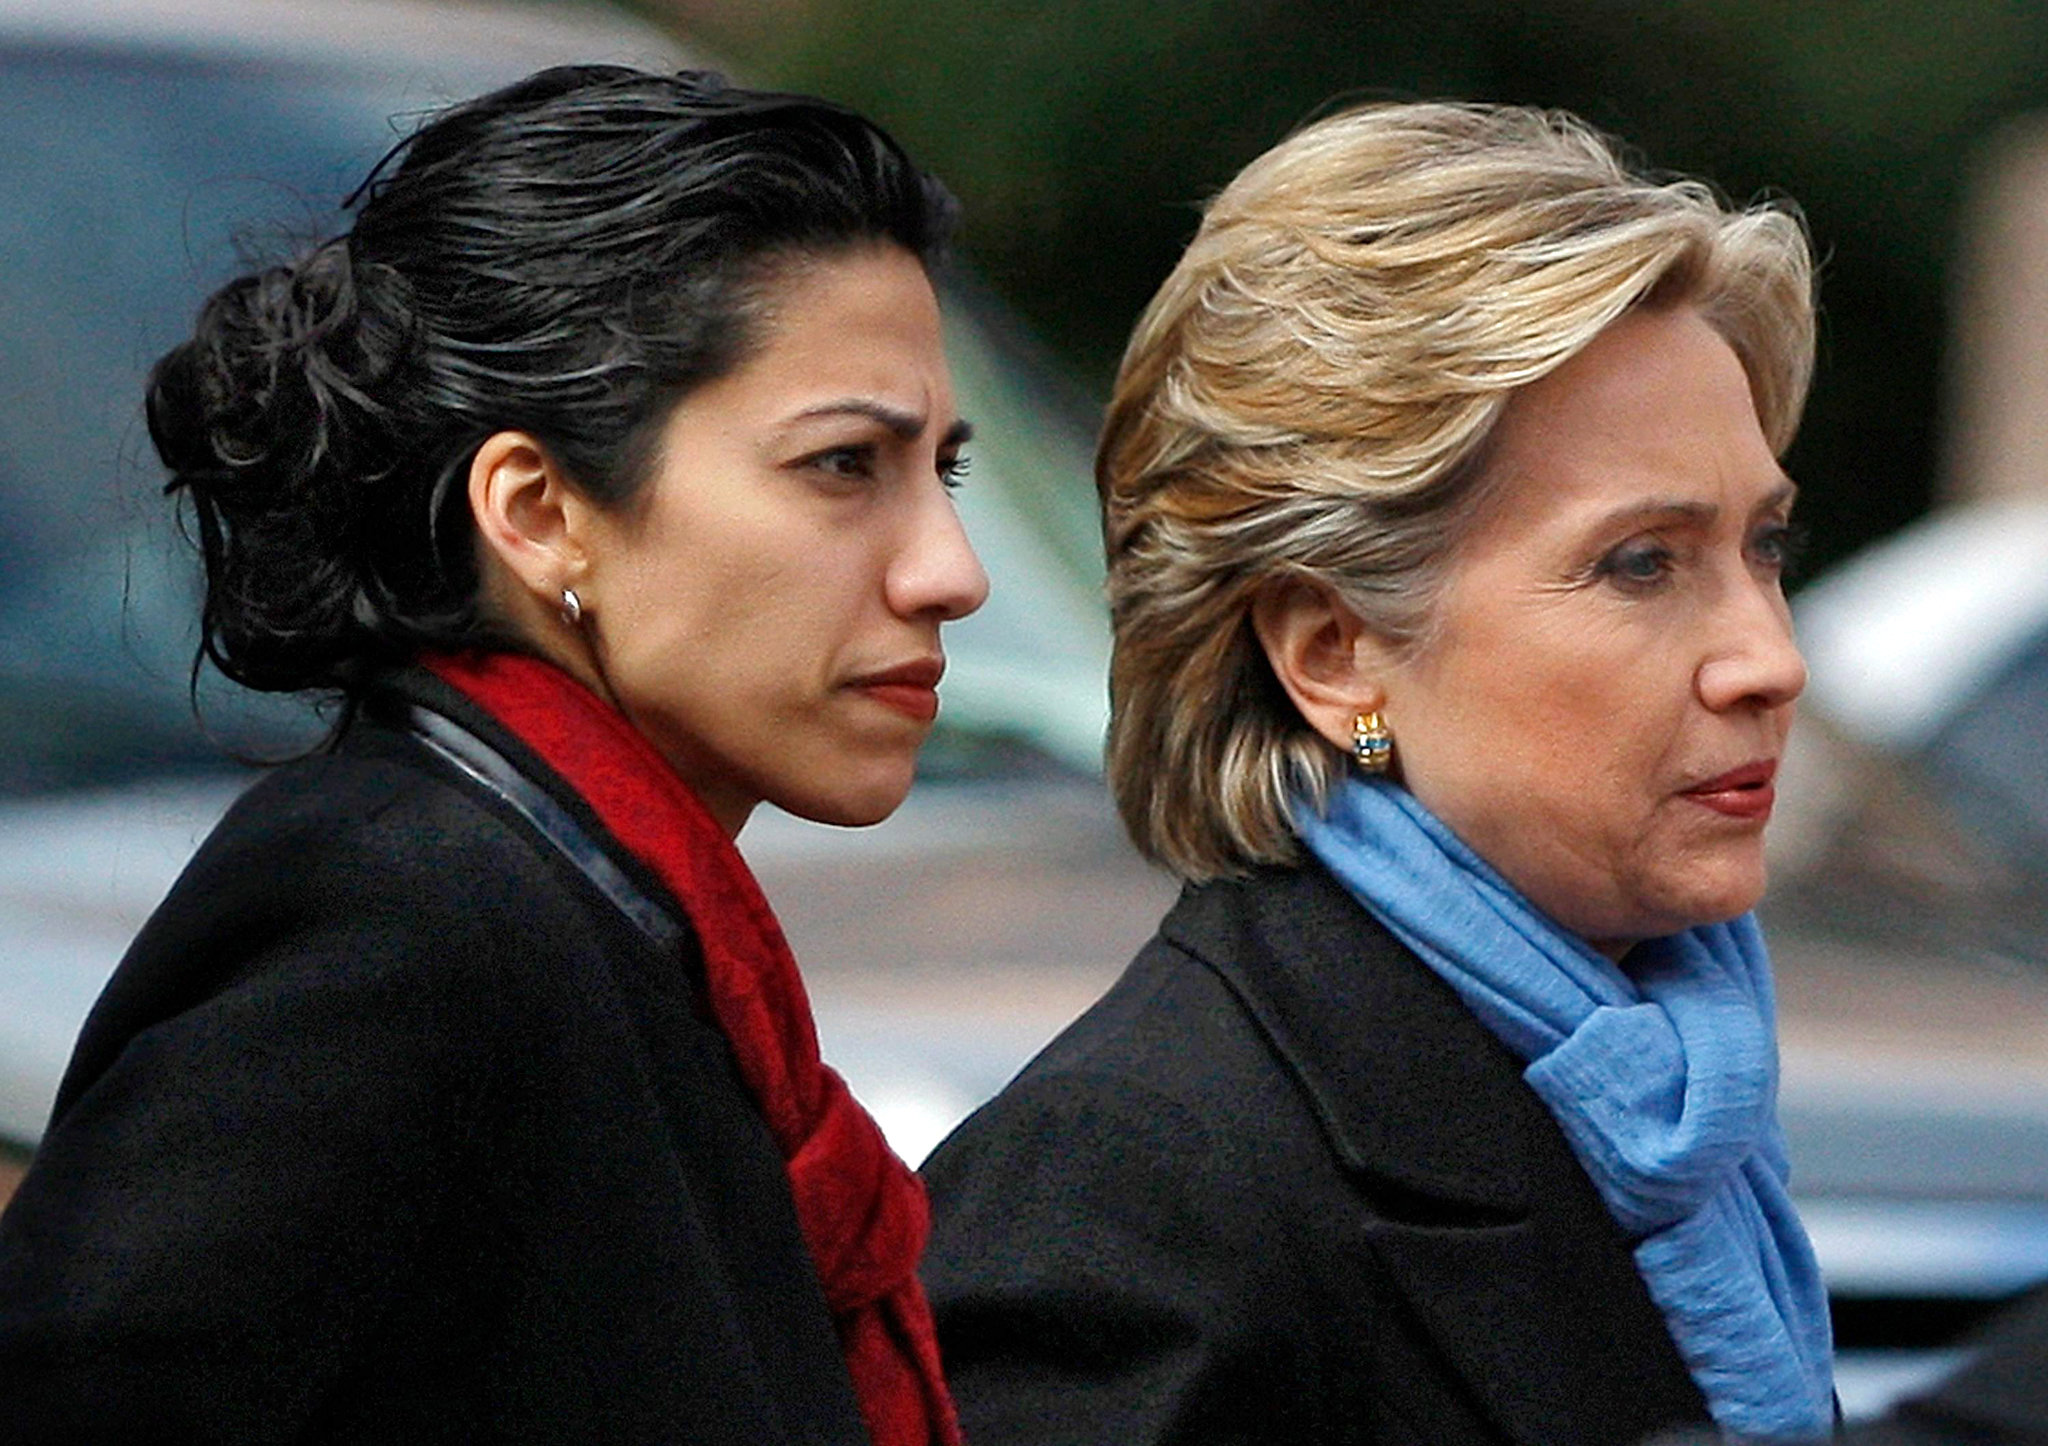 Huma Abedin walking with Hillary Clinton